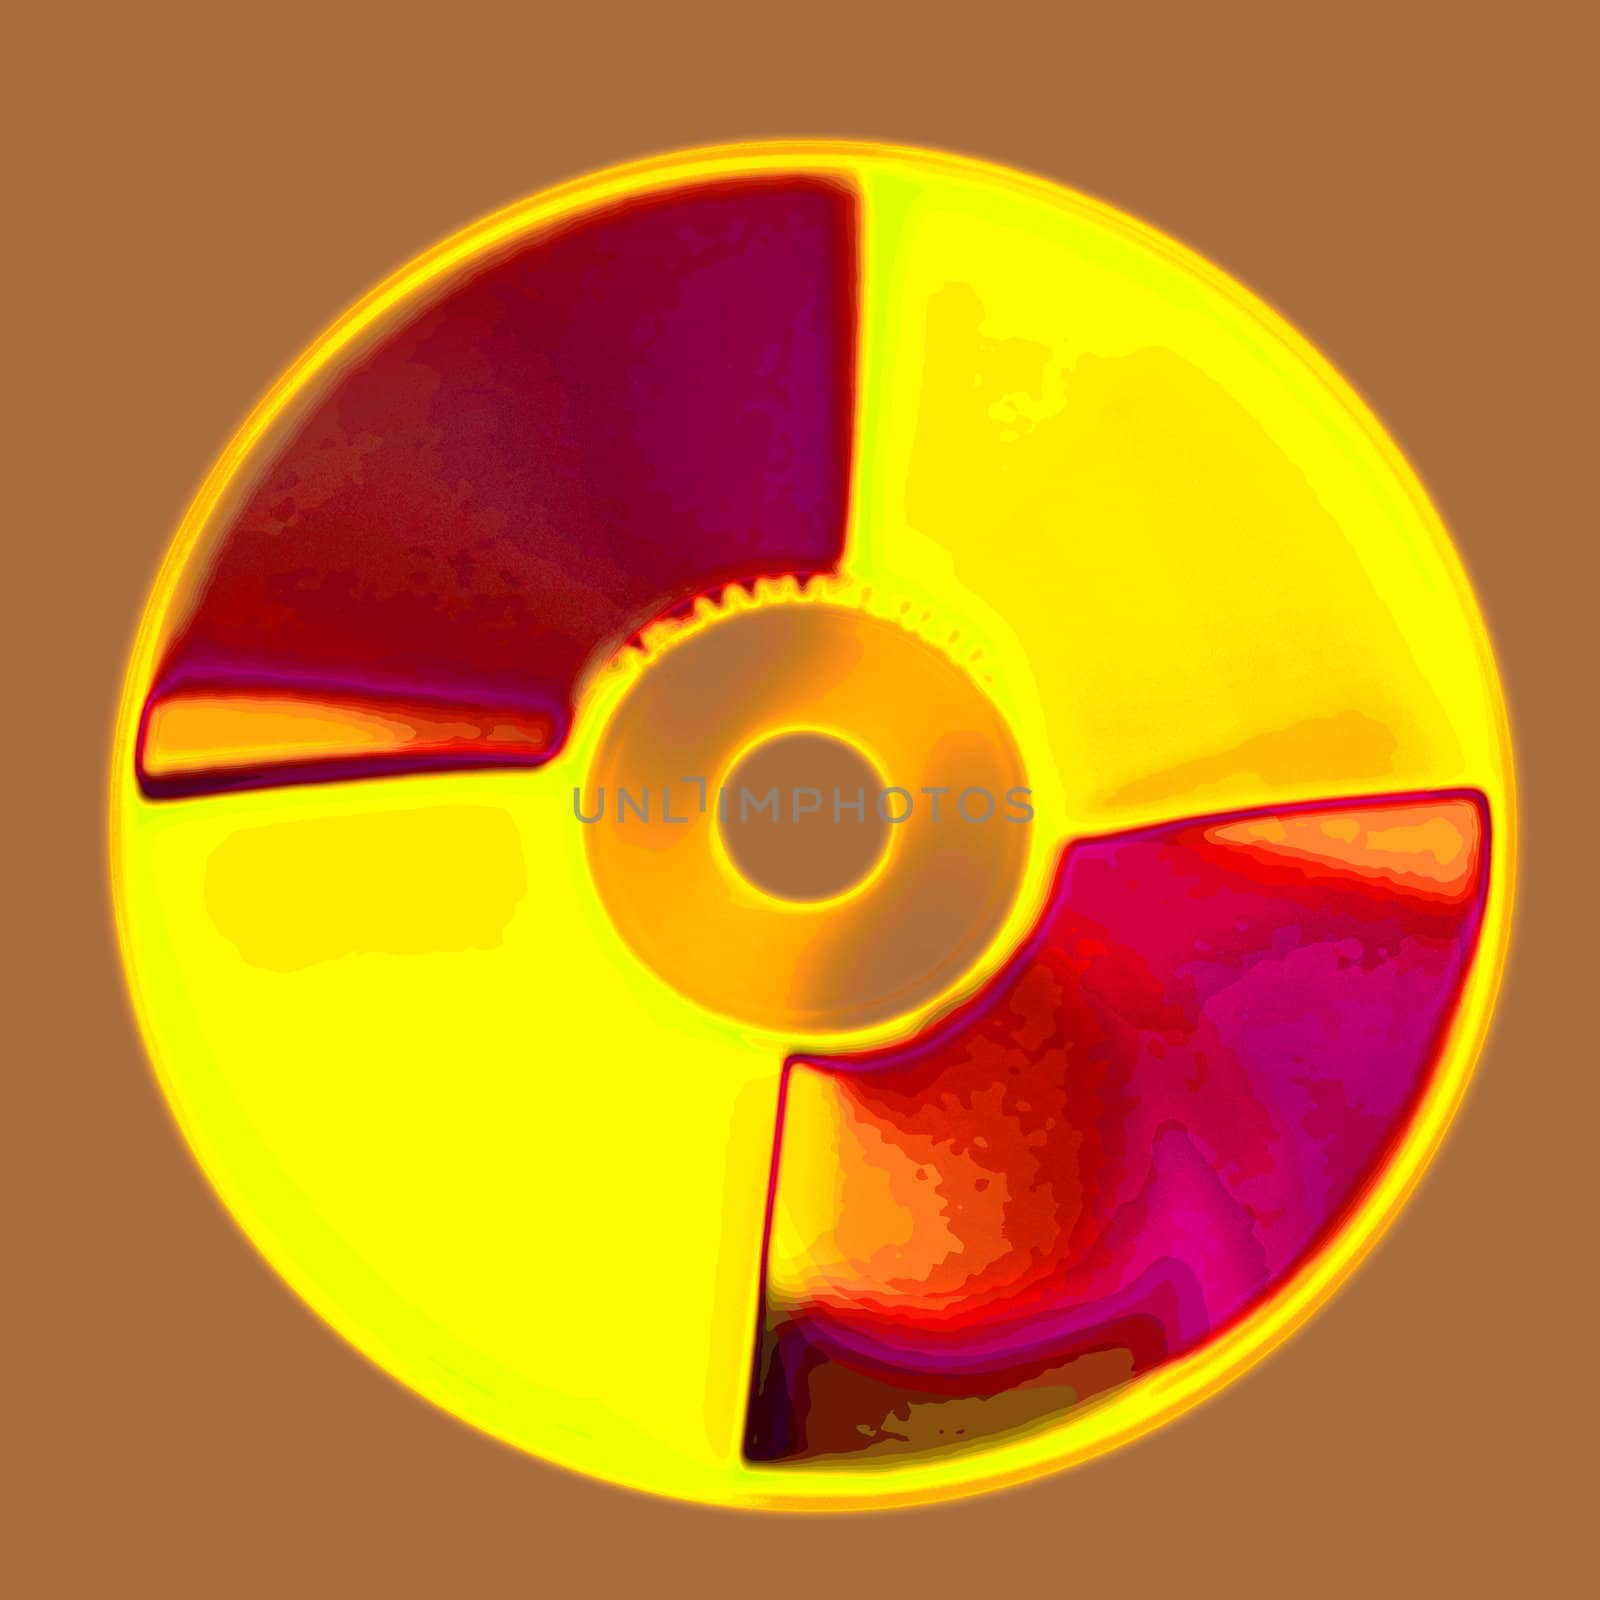 Pink and Yellow Data CD DVD pop art